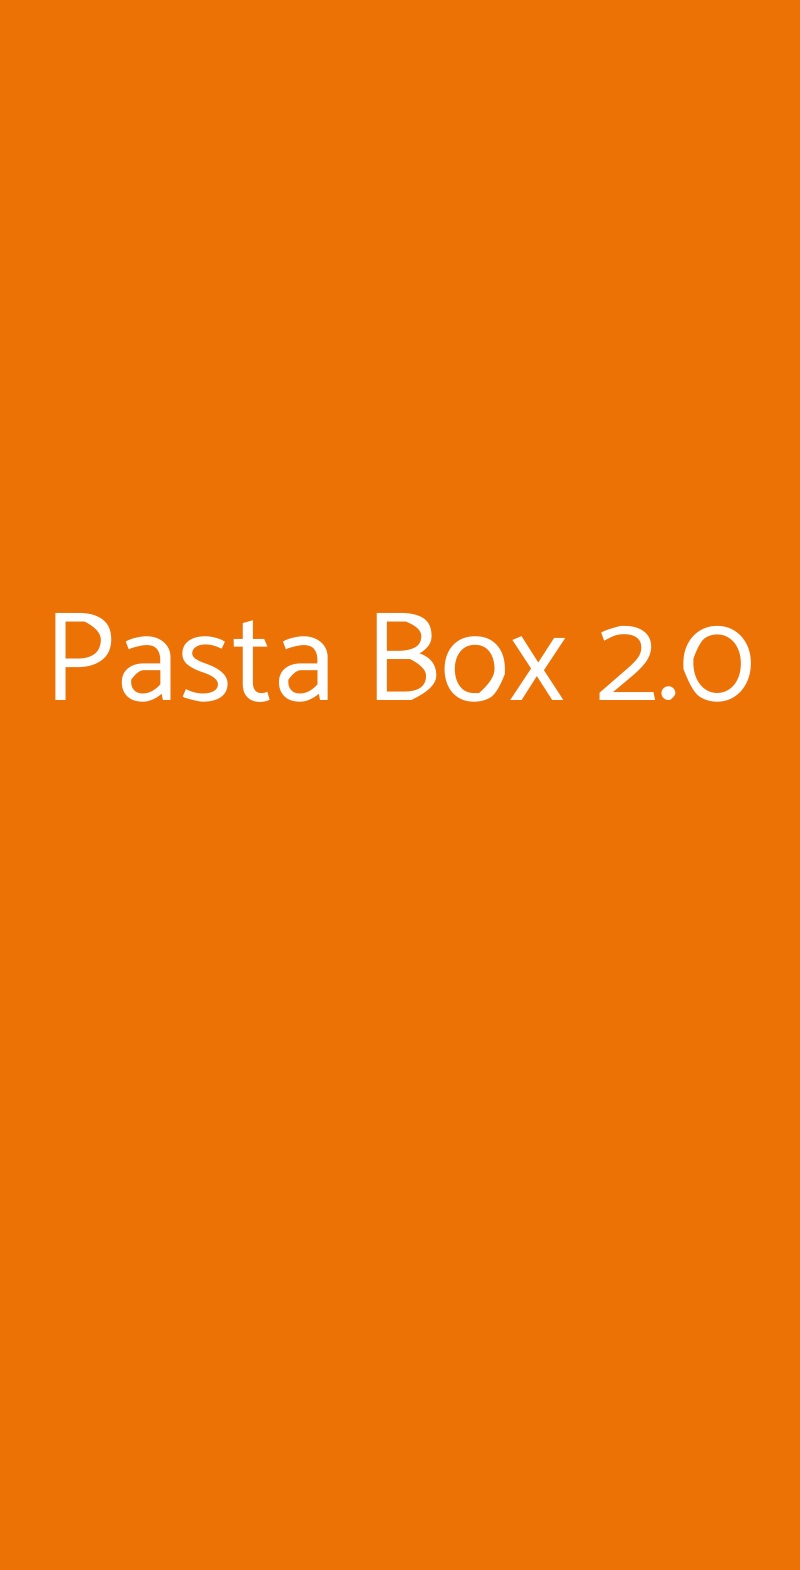 Pasta Box 2.0 Roma menù 1 pagina